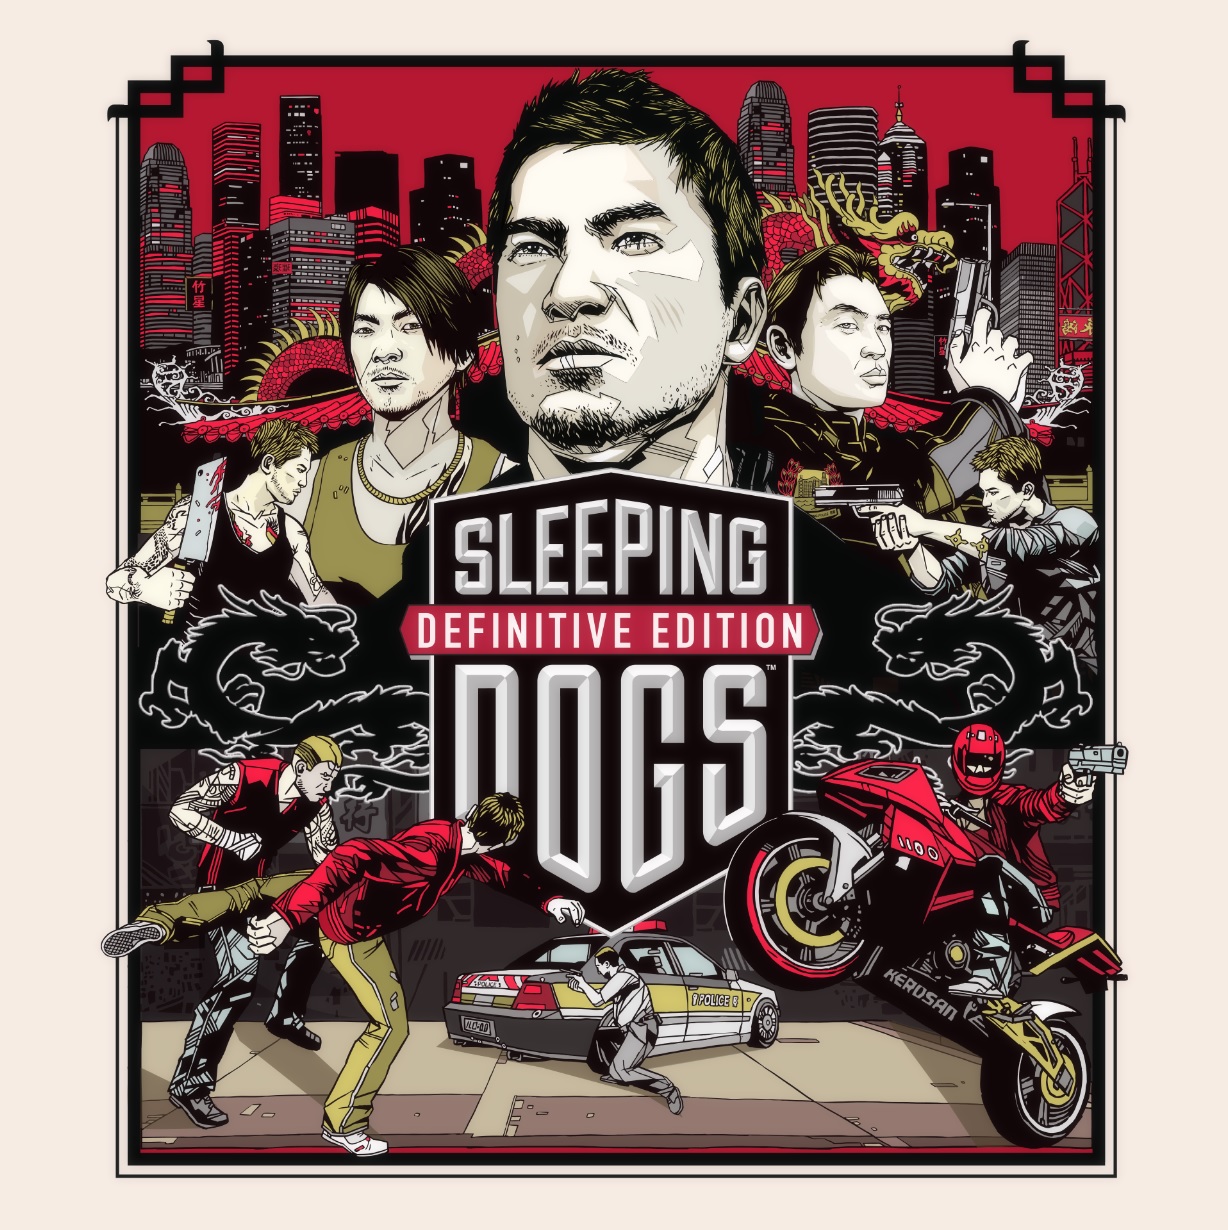 Sleeping dogs definitive edition apk